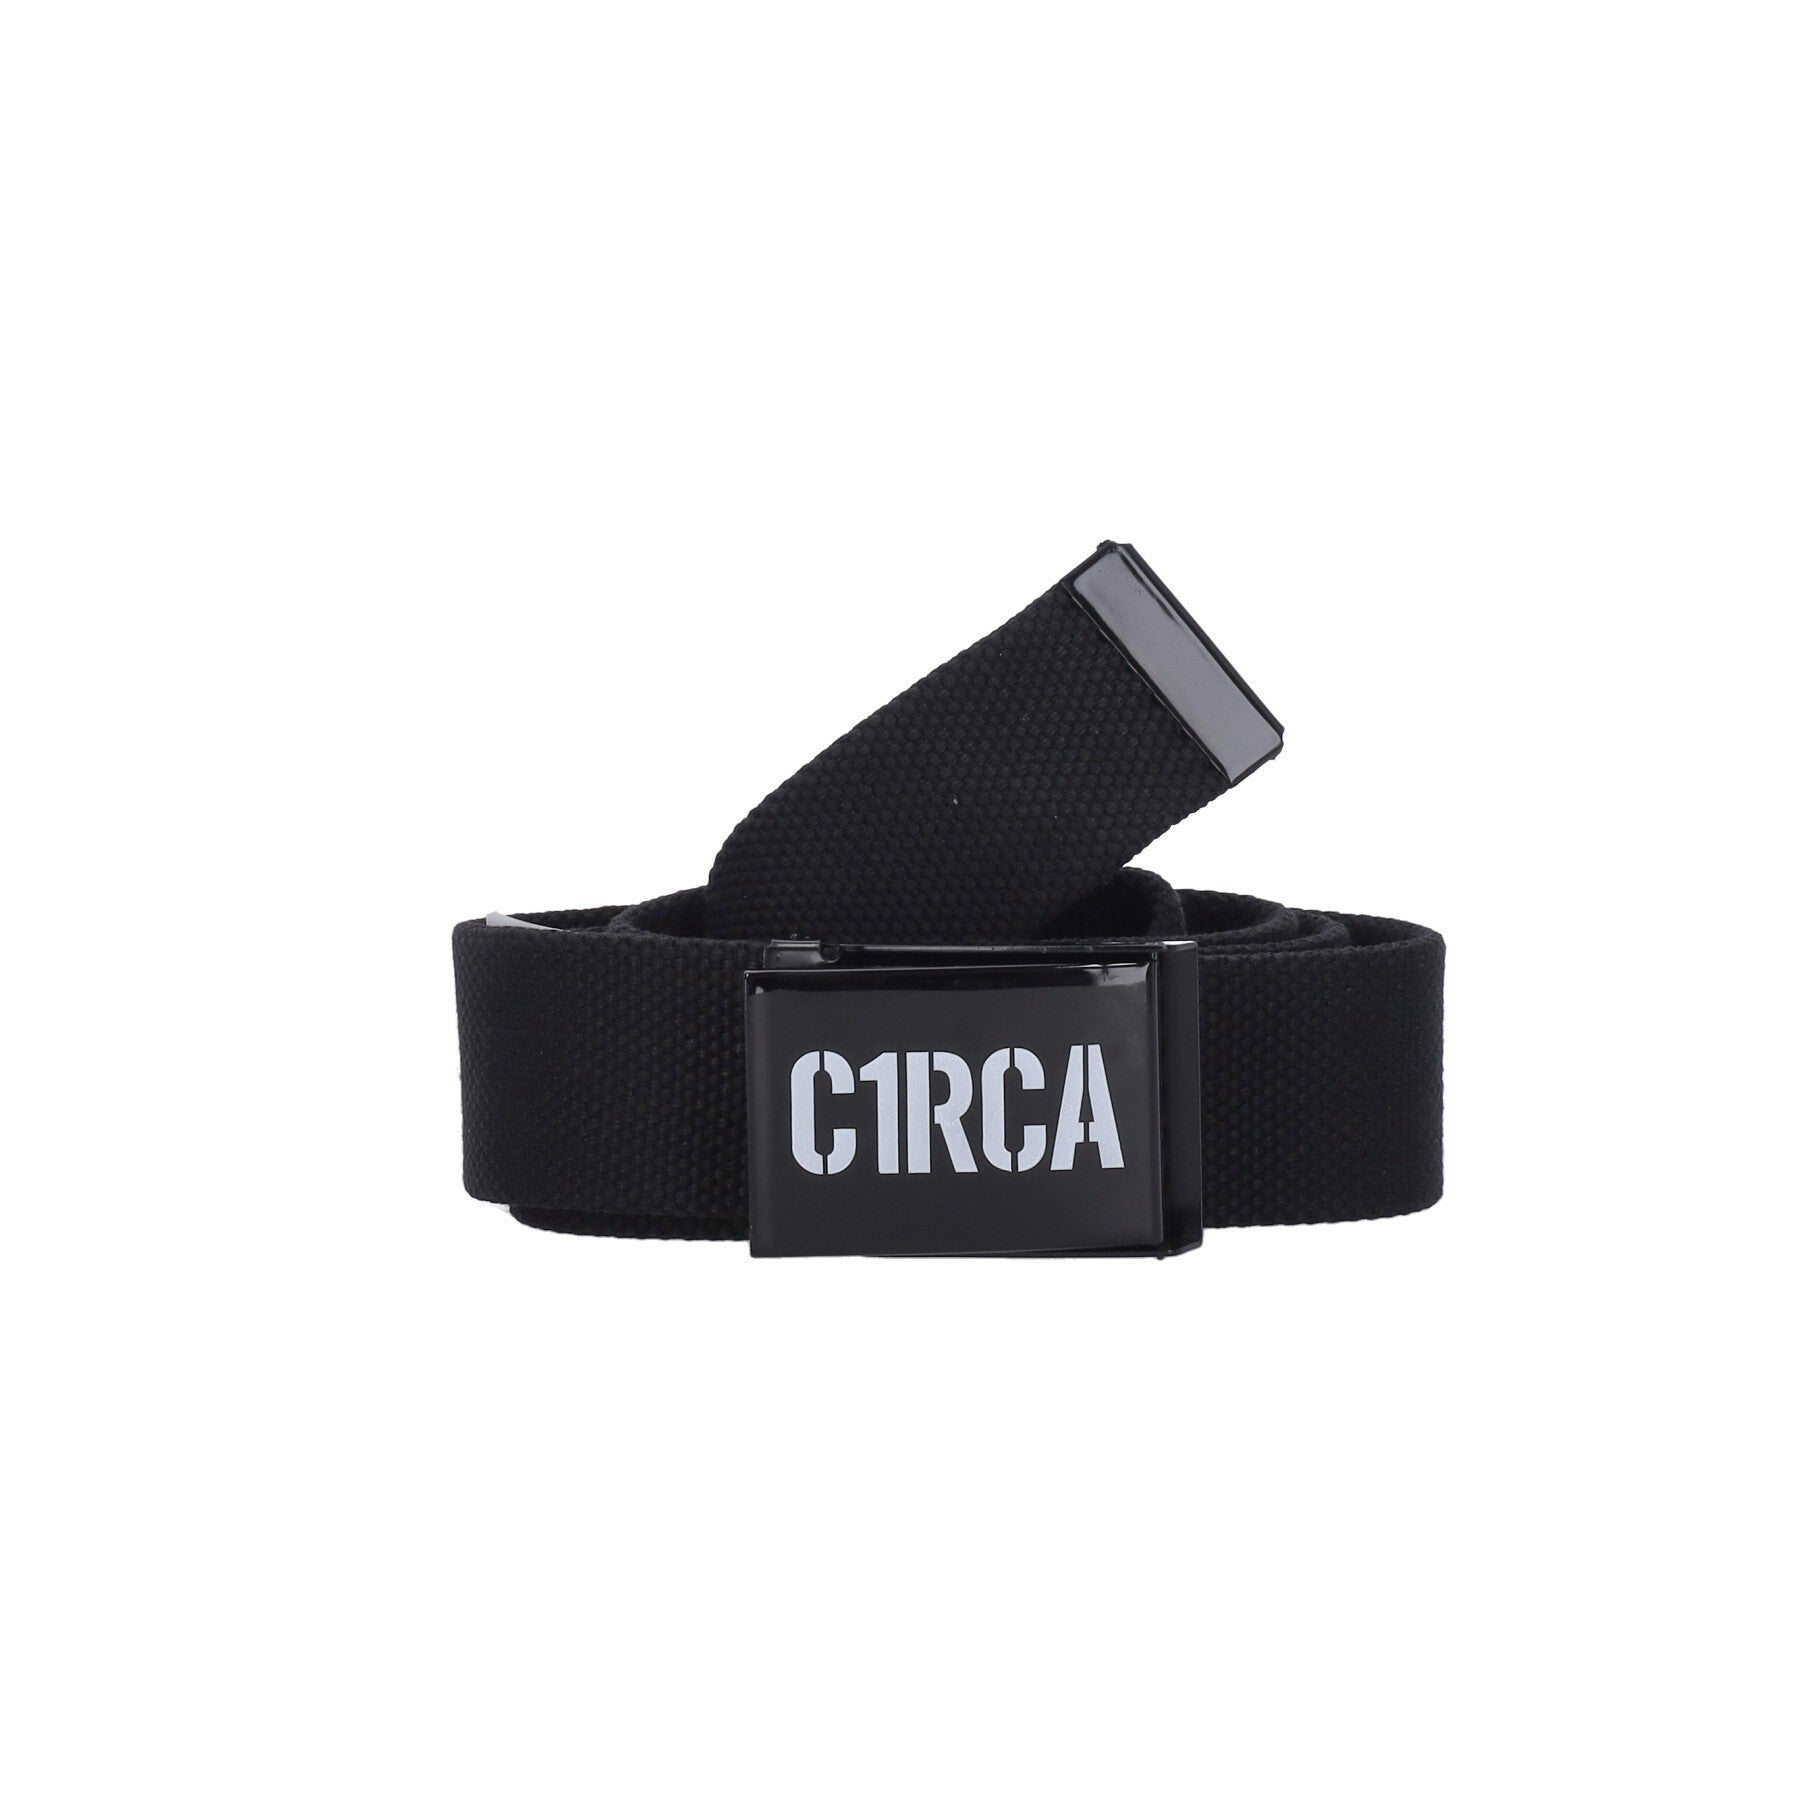 C1rca, Cintura Uomo Peacemaker Belt, Black/white